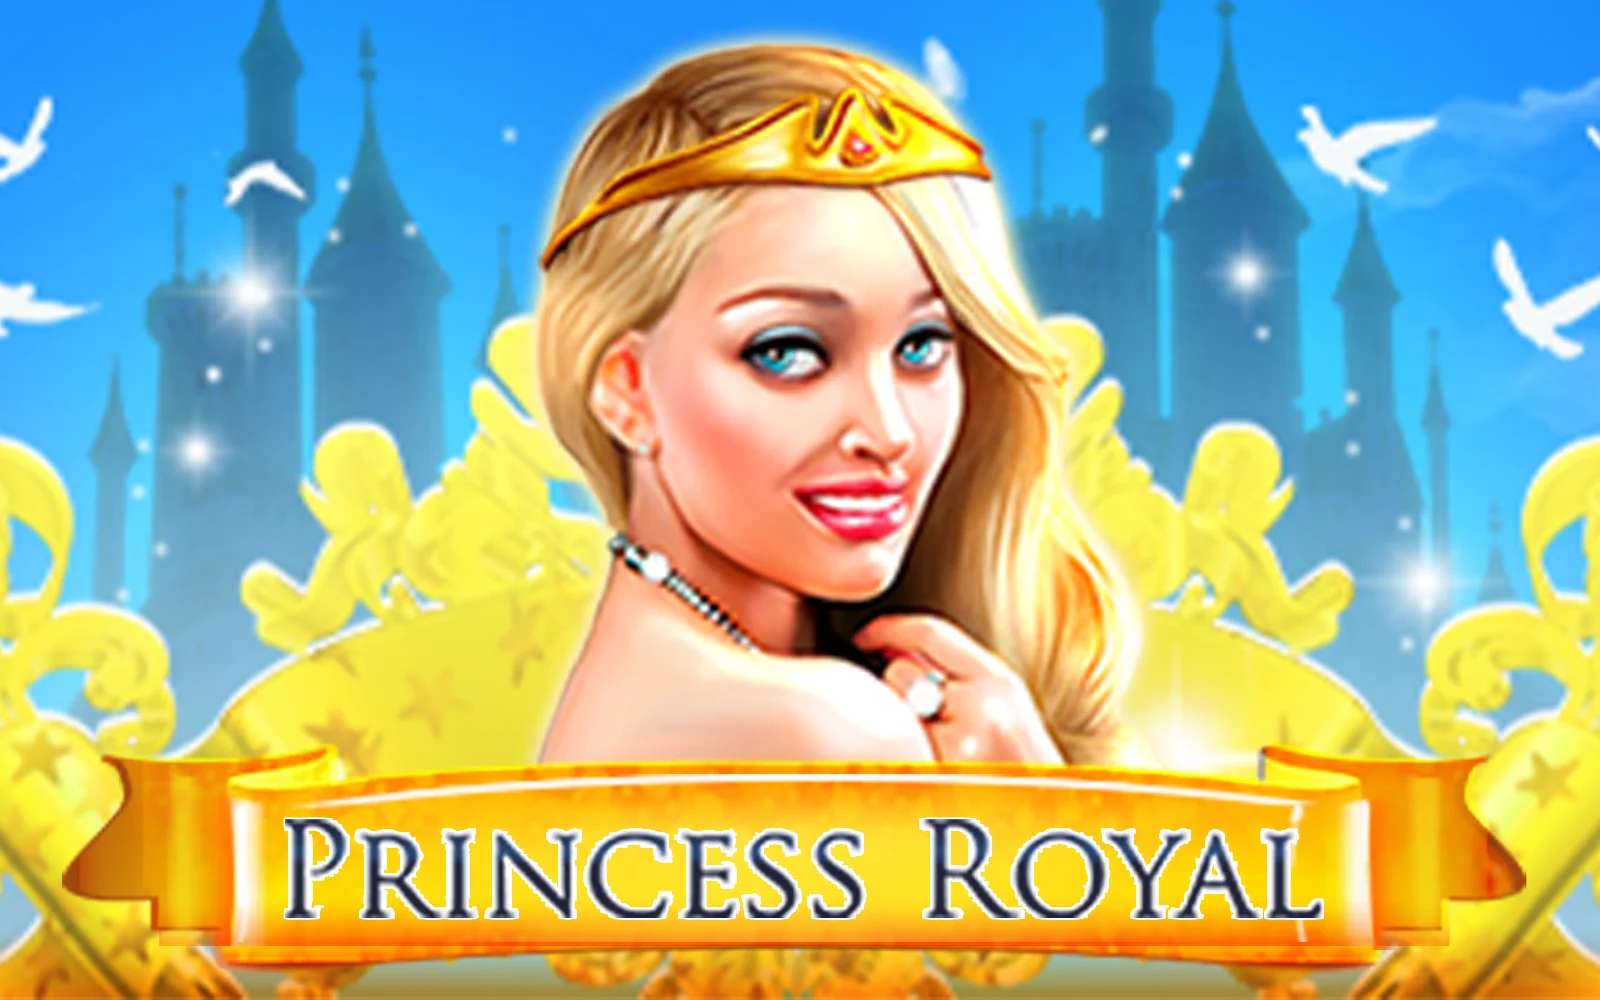 Gioca a Princess Royal sul casino online Starcasino.be